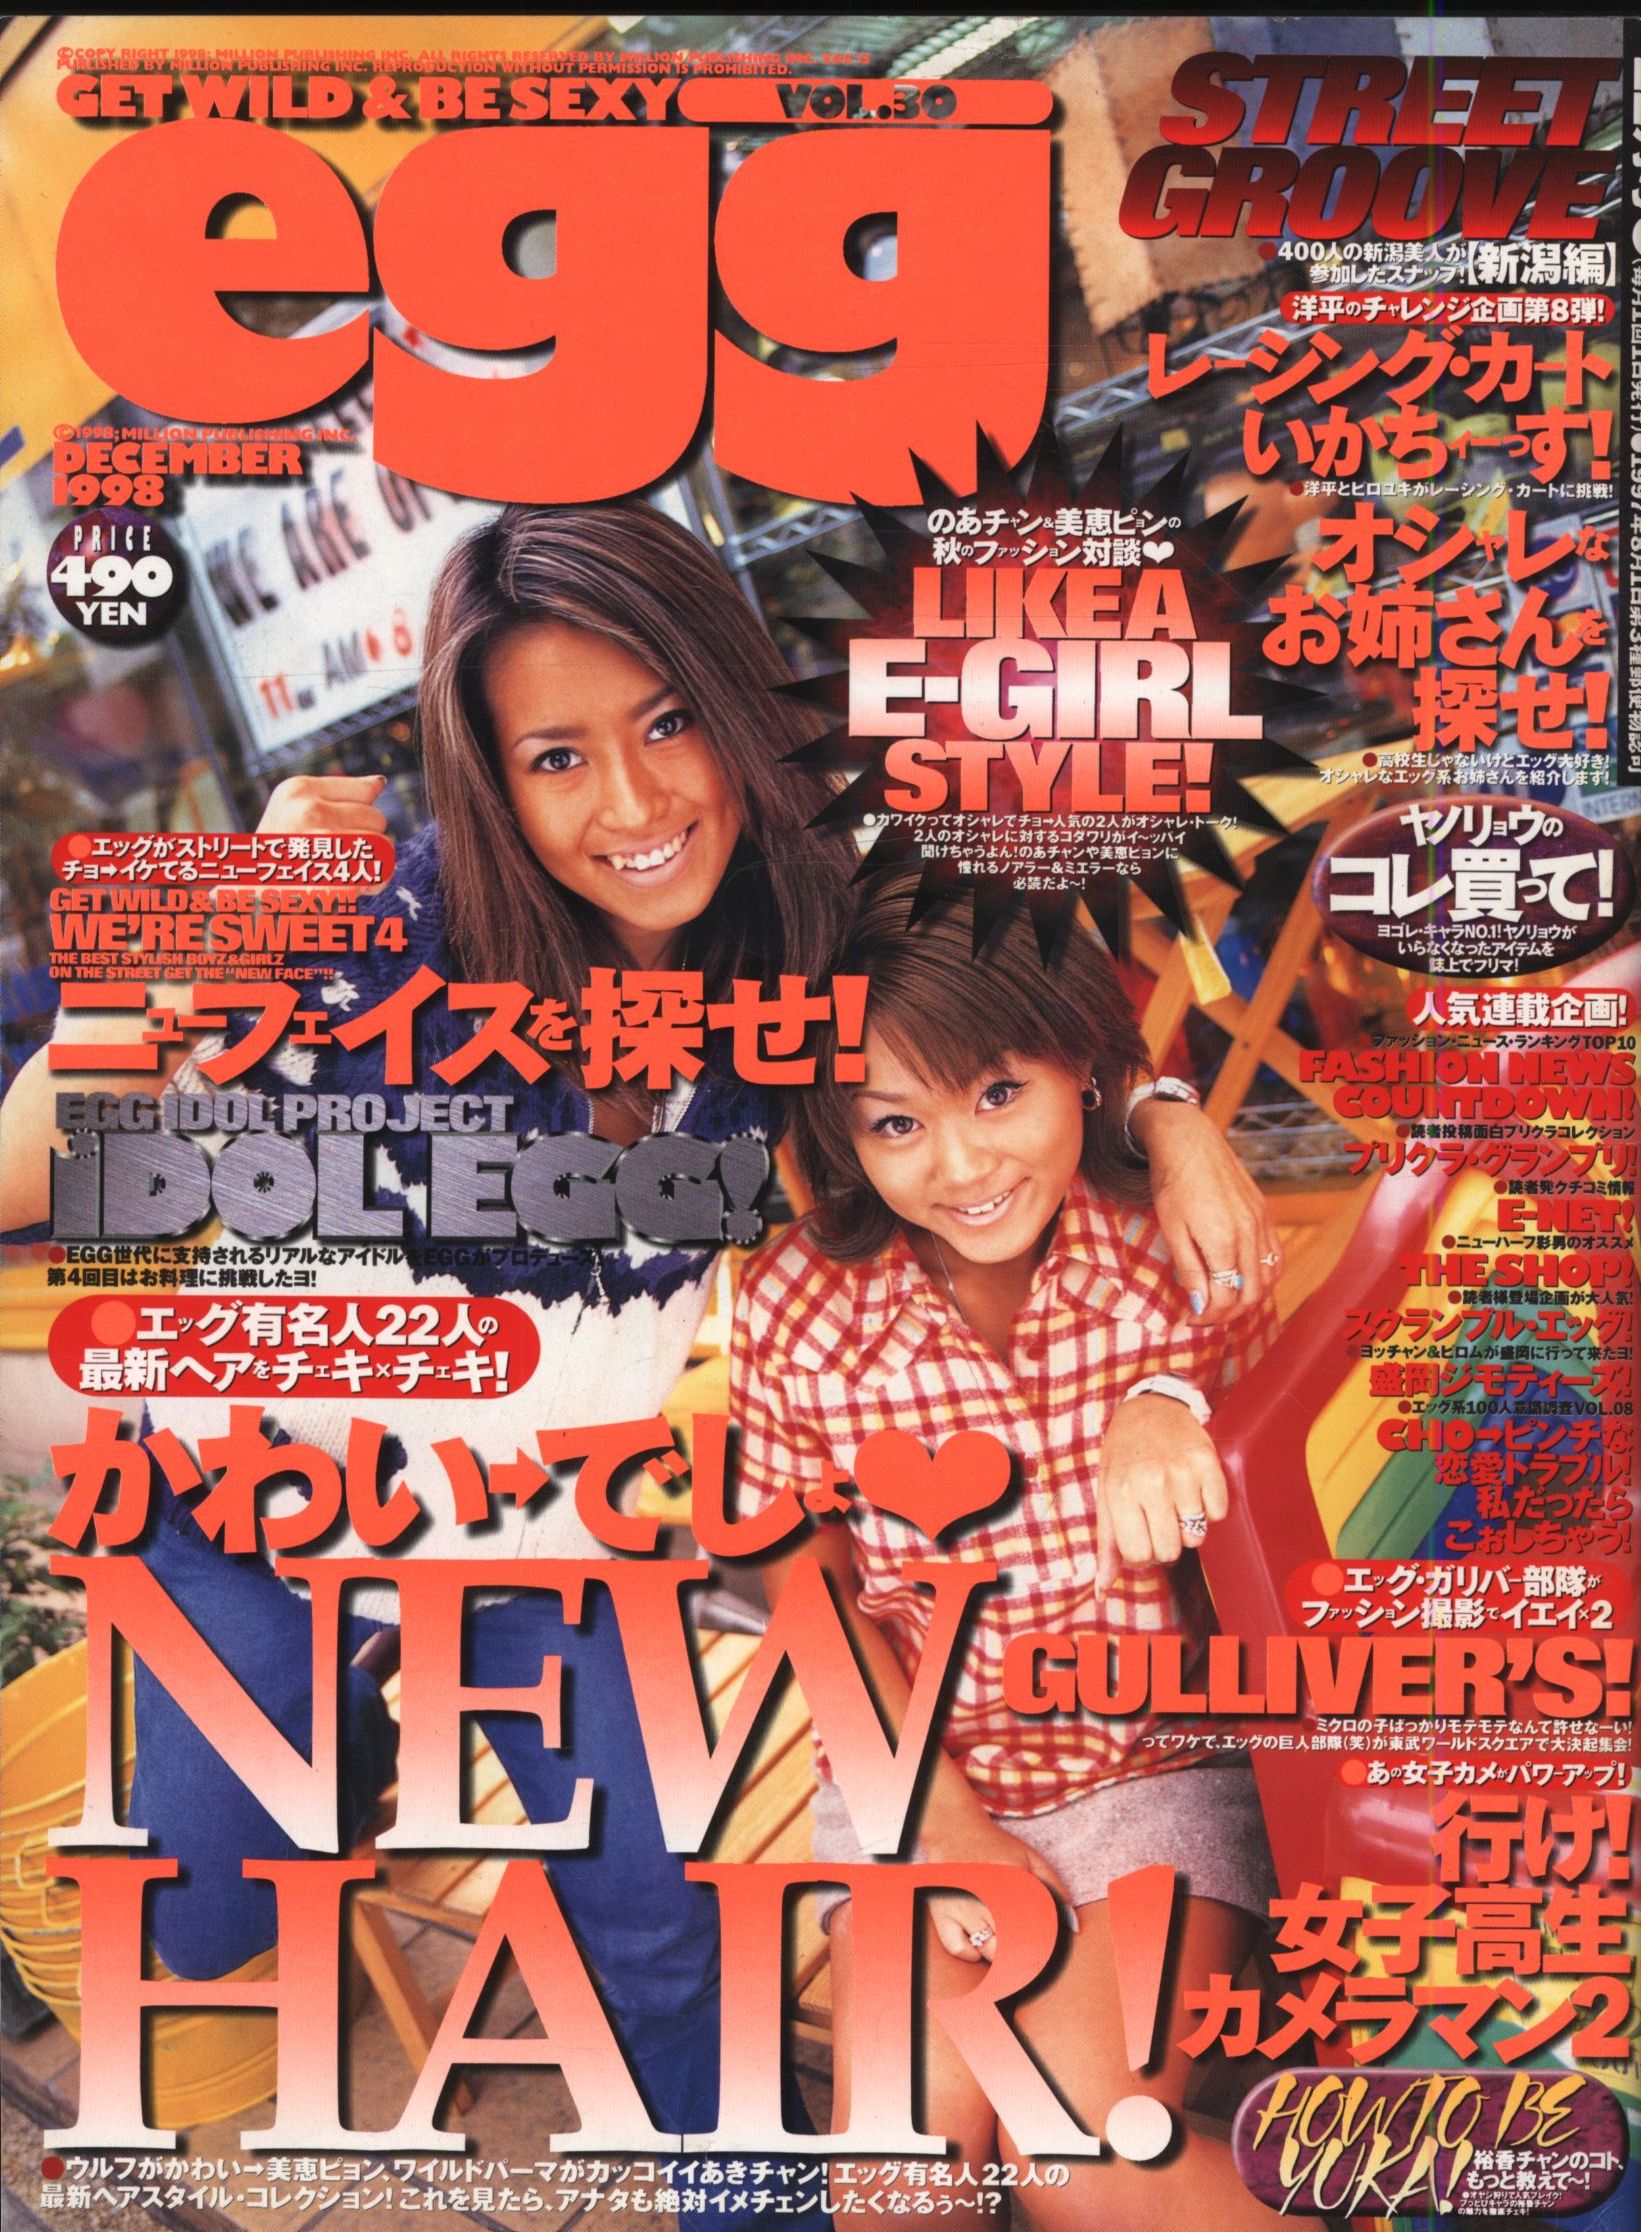 egg 雑誌 1997年 12月 vol.18 ギャル雑誌 ギャル コギャル - 雑誌